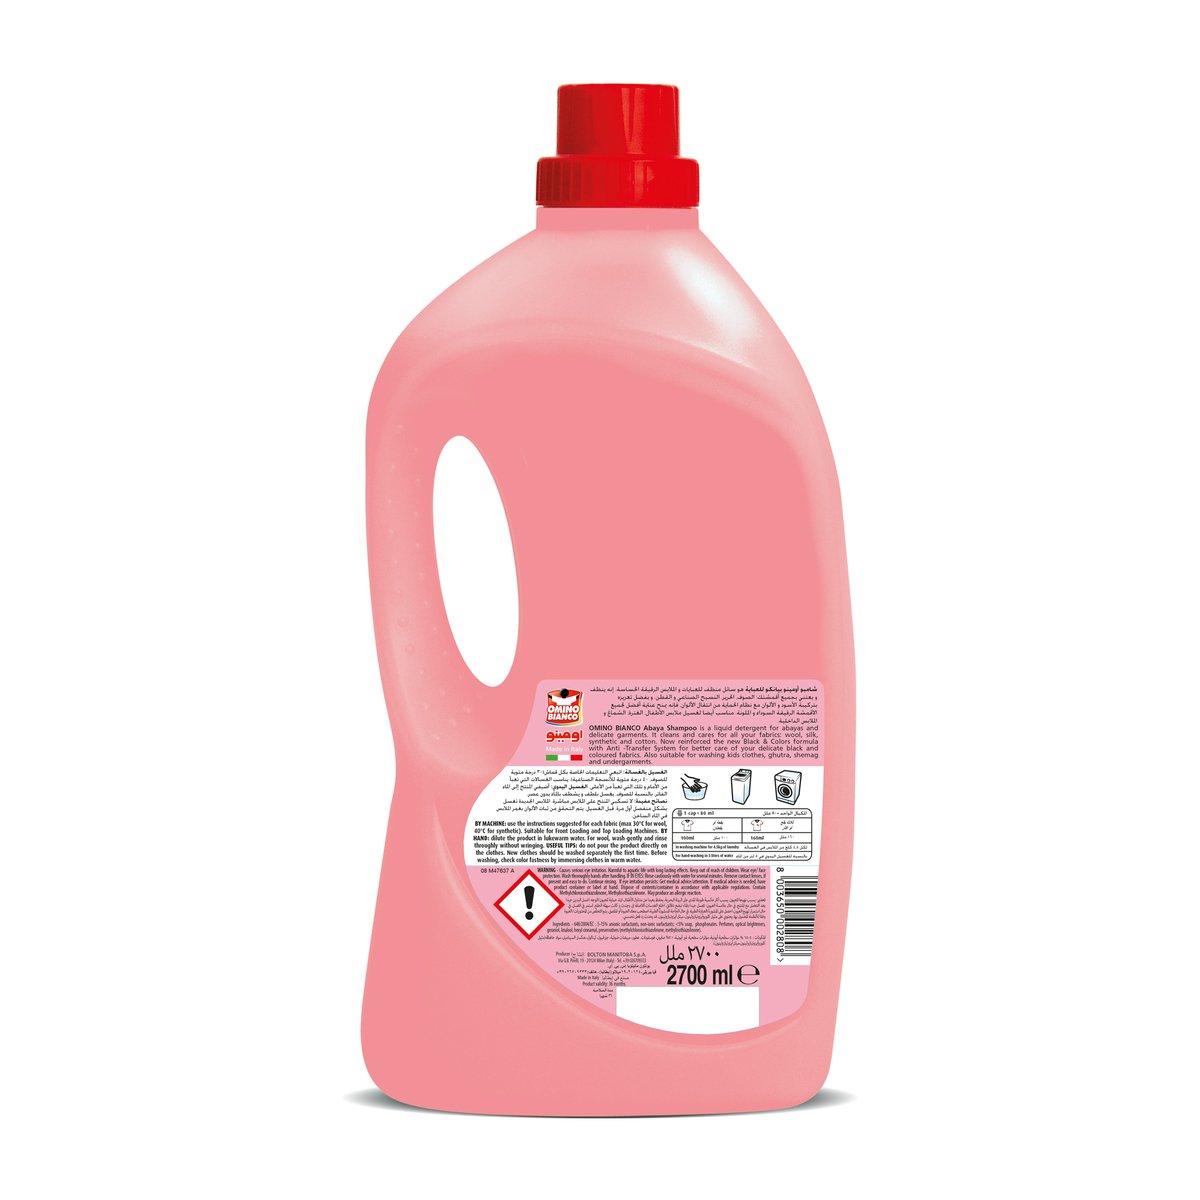 Omino Bianco Abaya Shampoo Pink 2.7Litre